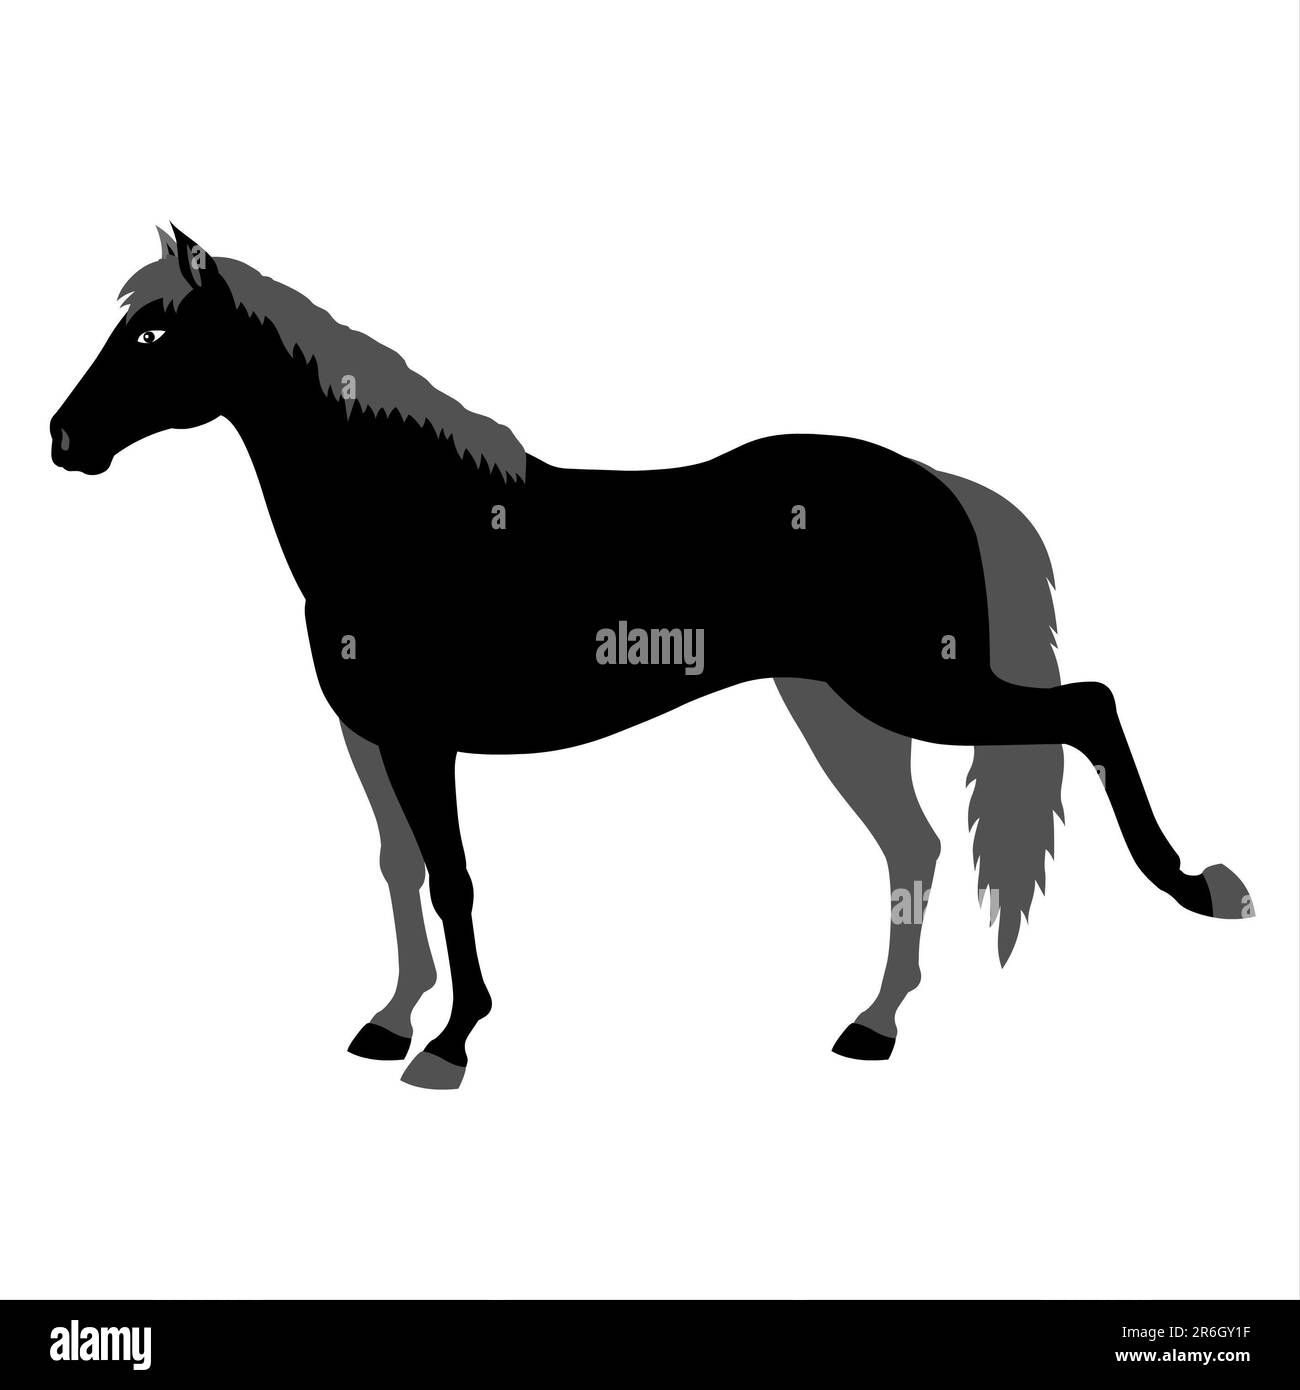 Horse silhouette on white background Stock Photo